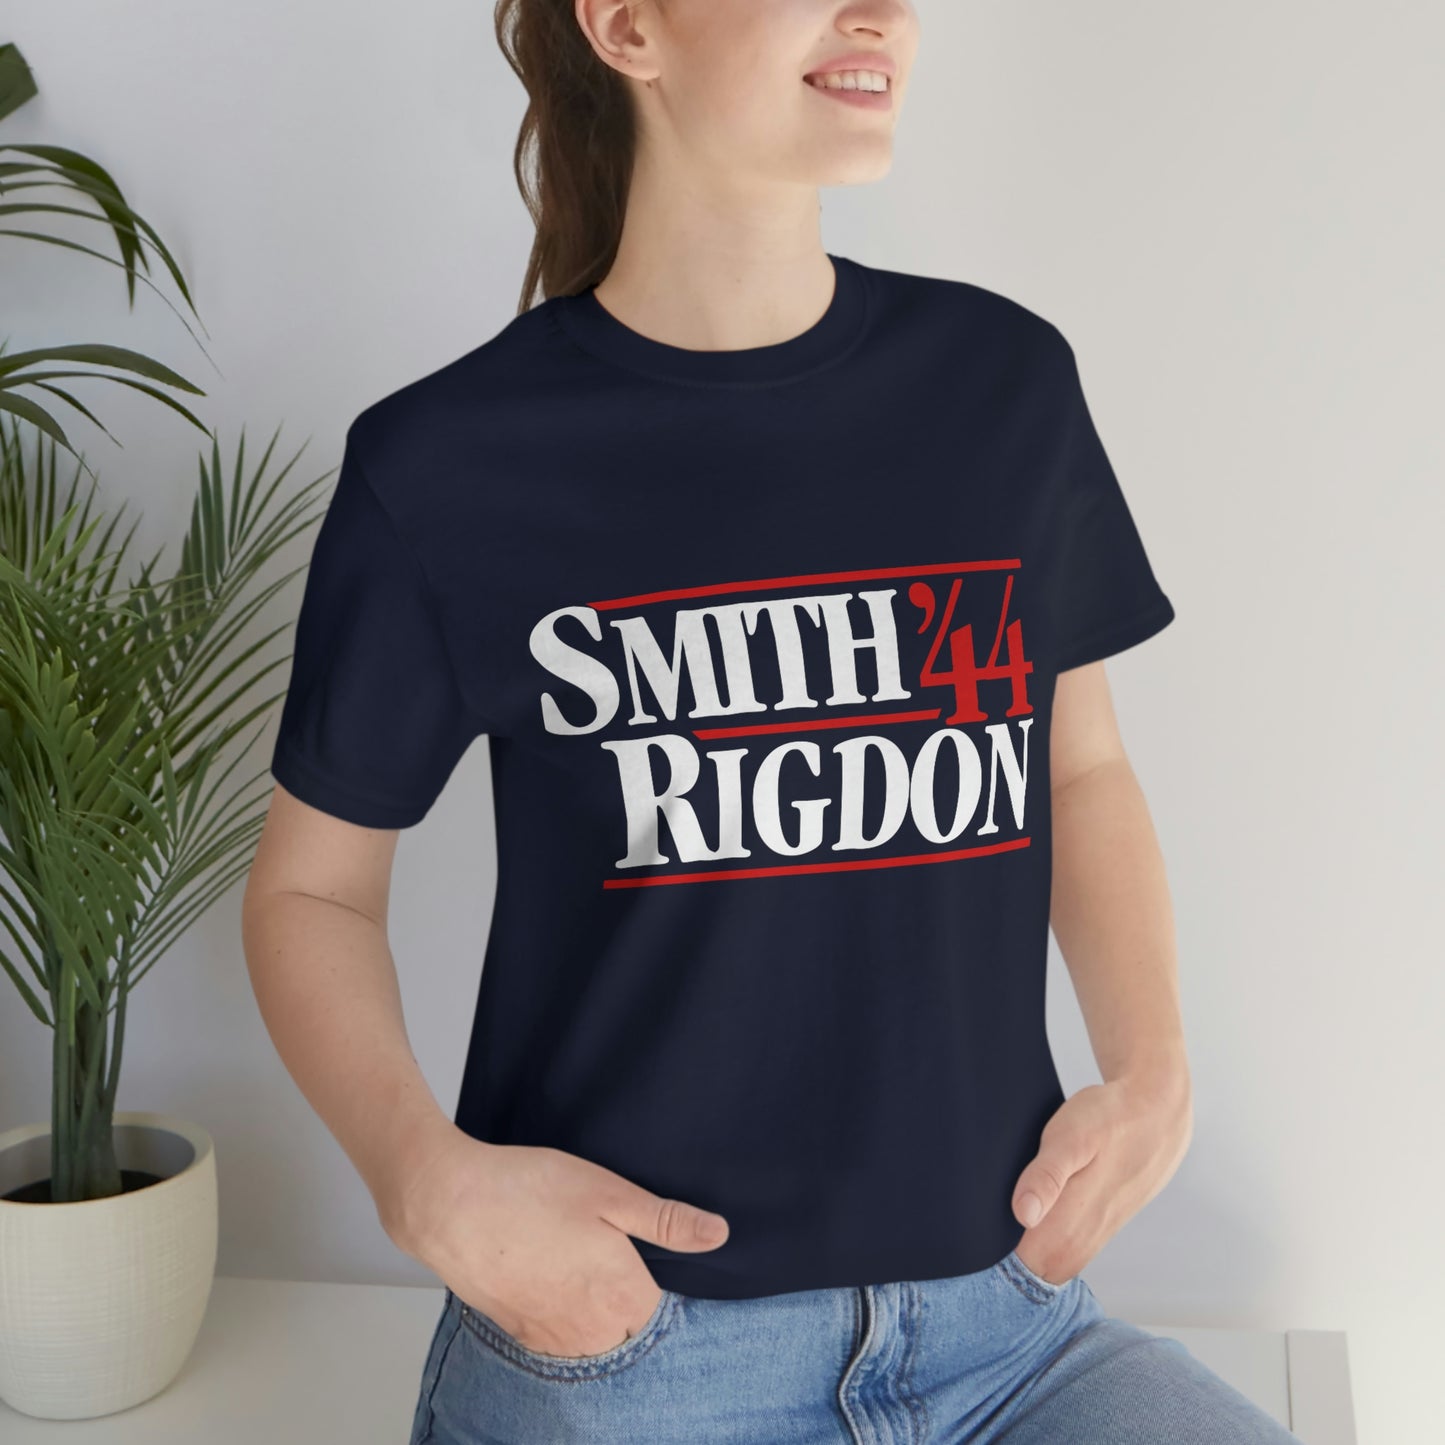 Smith & Rigdon '44 Presidential Campaign T-Shirt